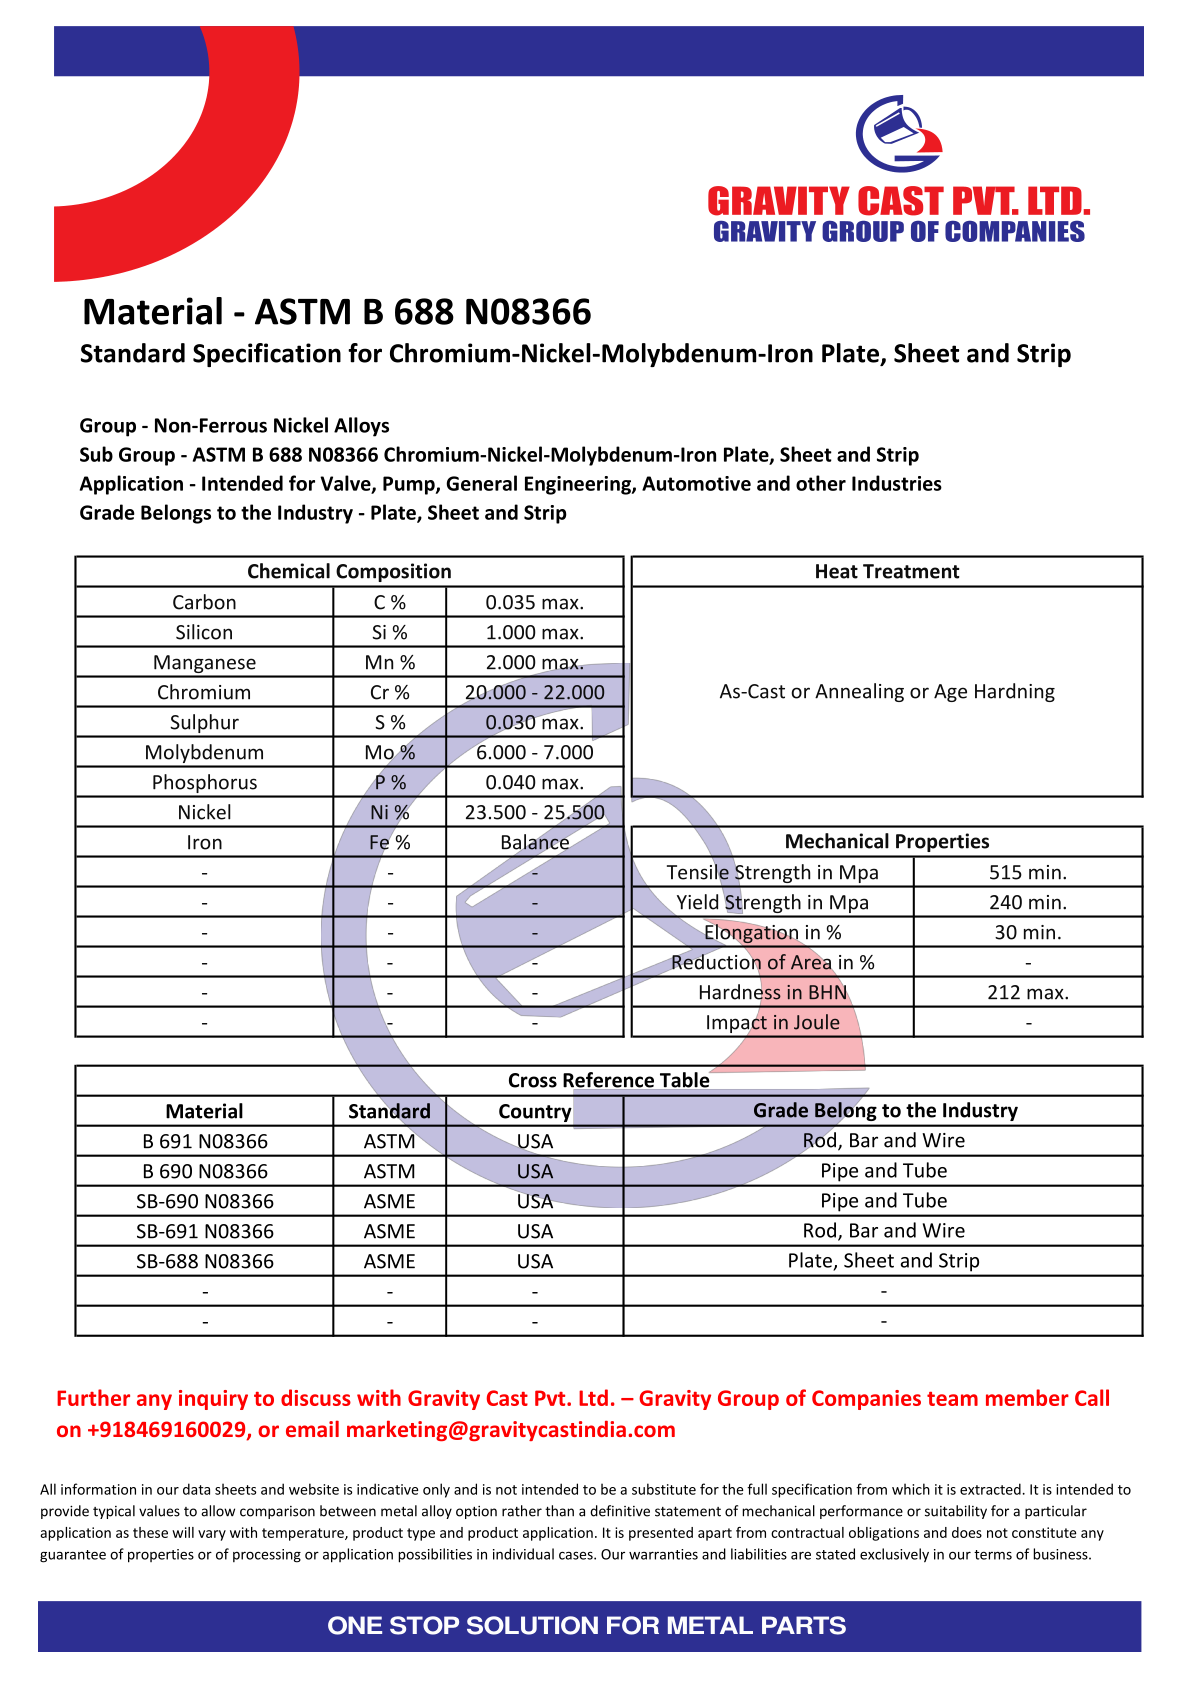 ASTM B 688 N08366.pdf